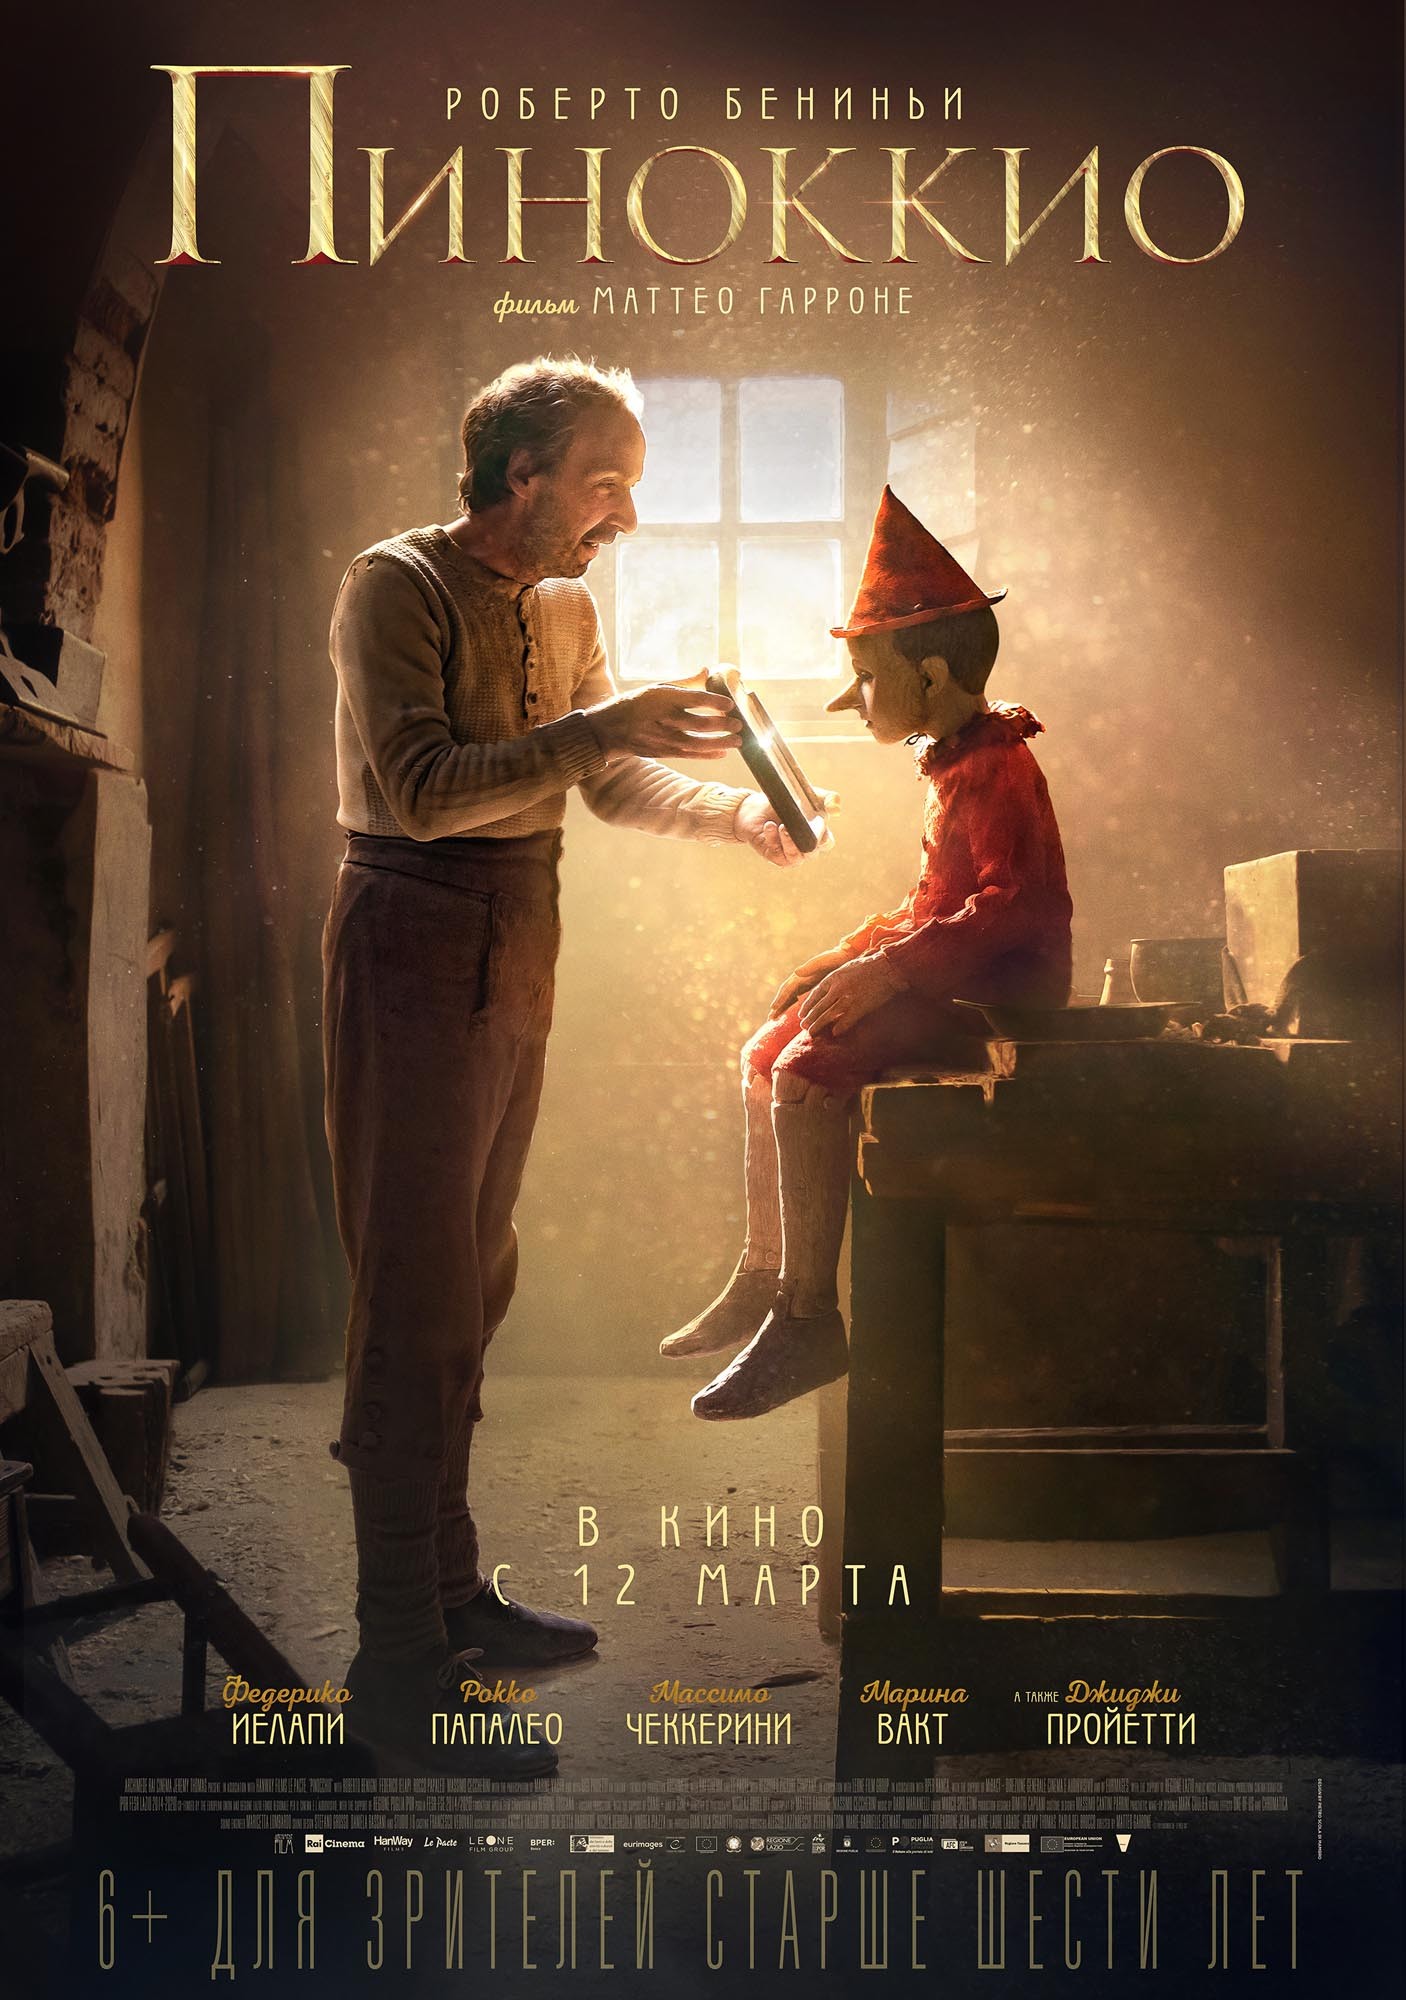 Постер N166871 к фильму Пиноккио (2019)